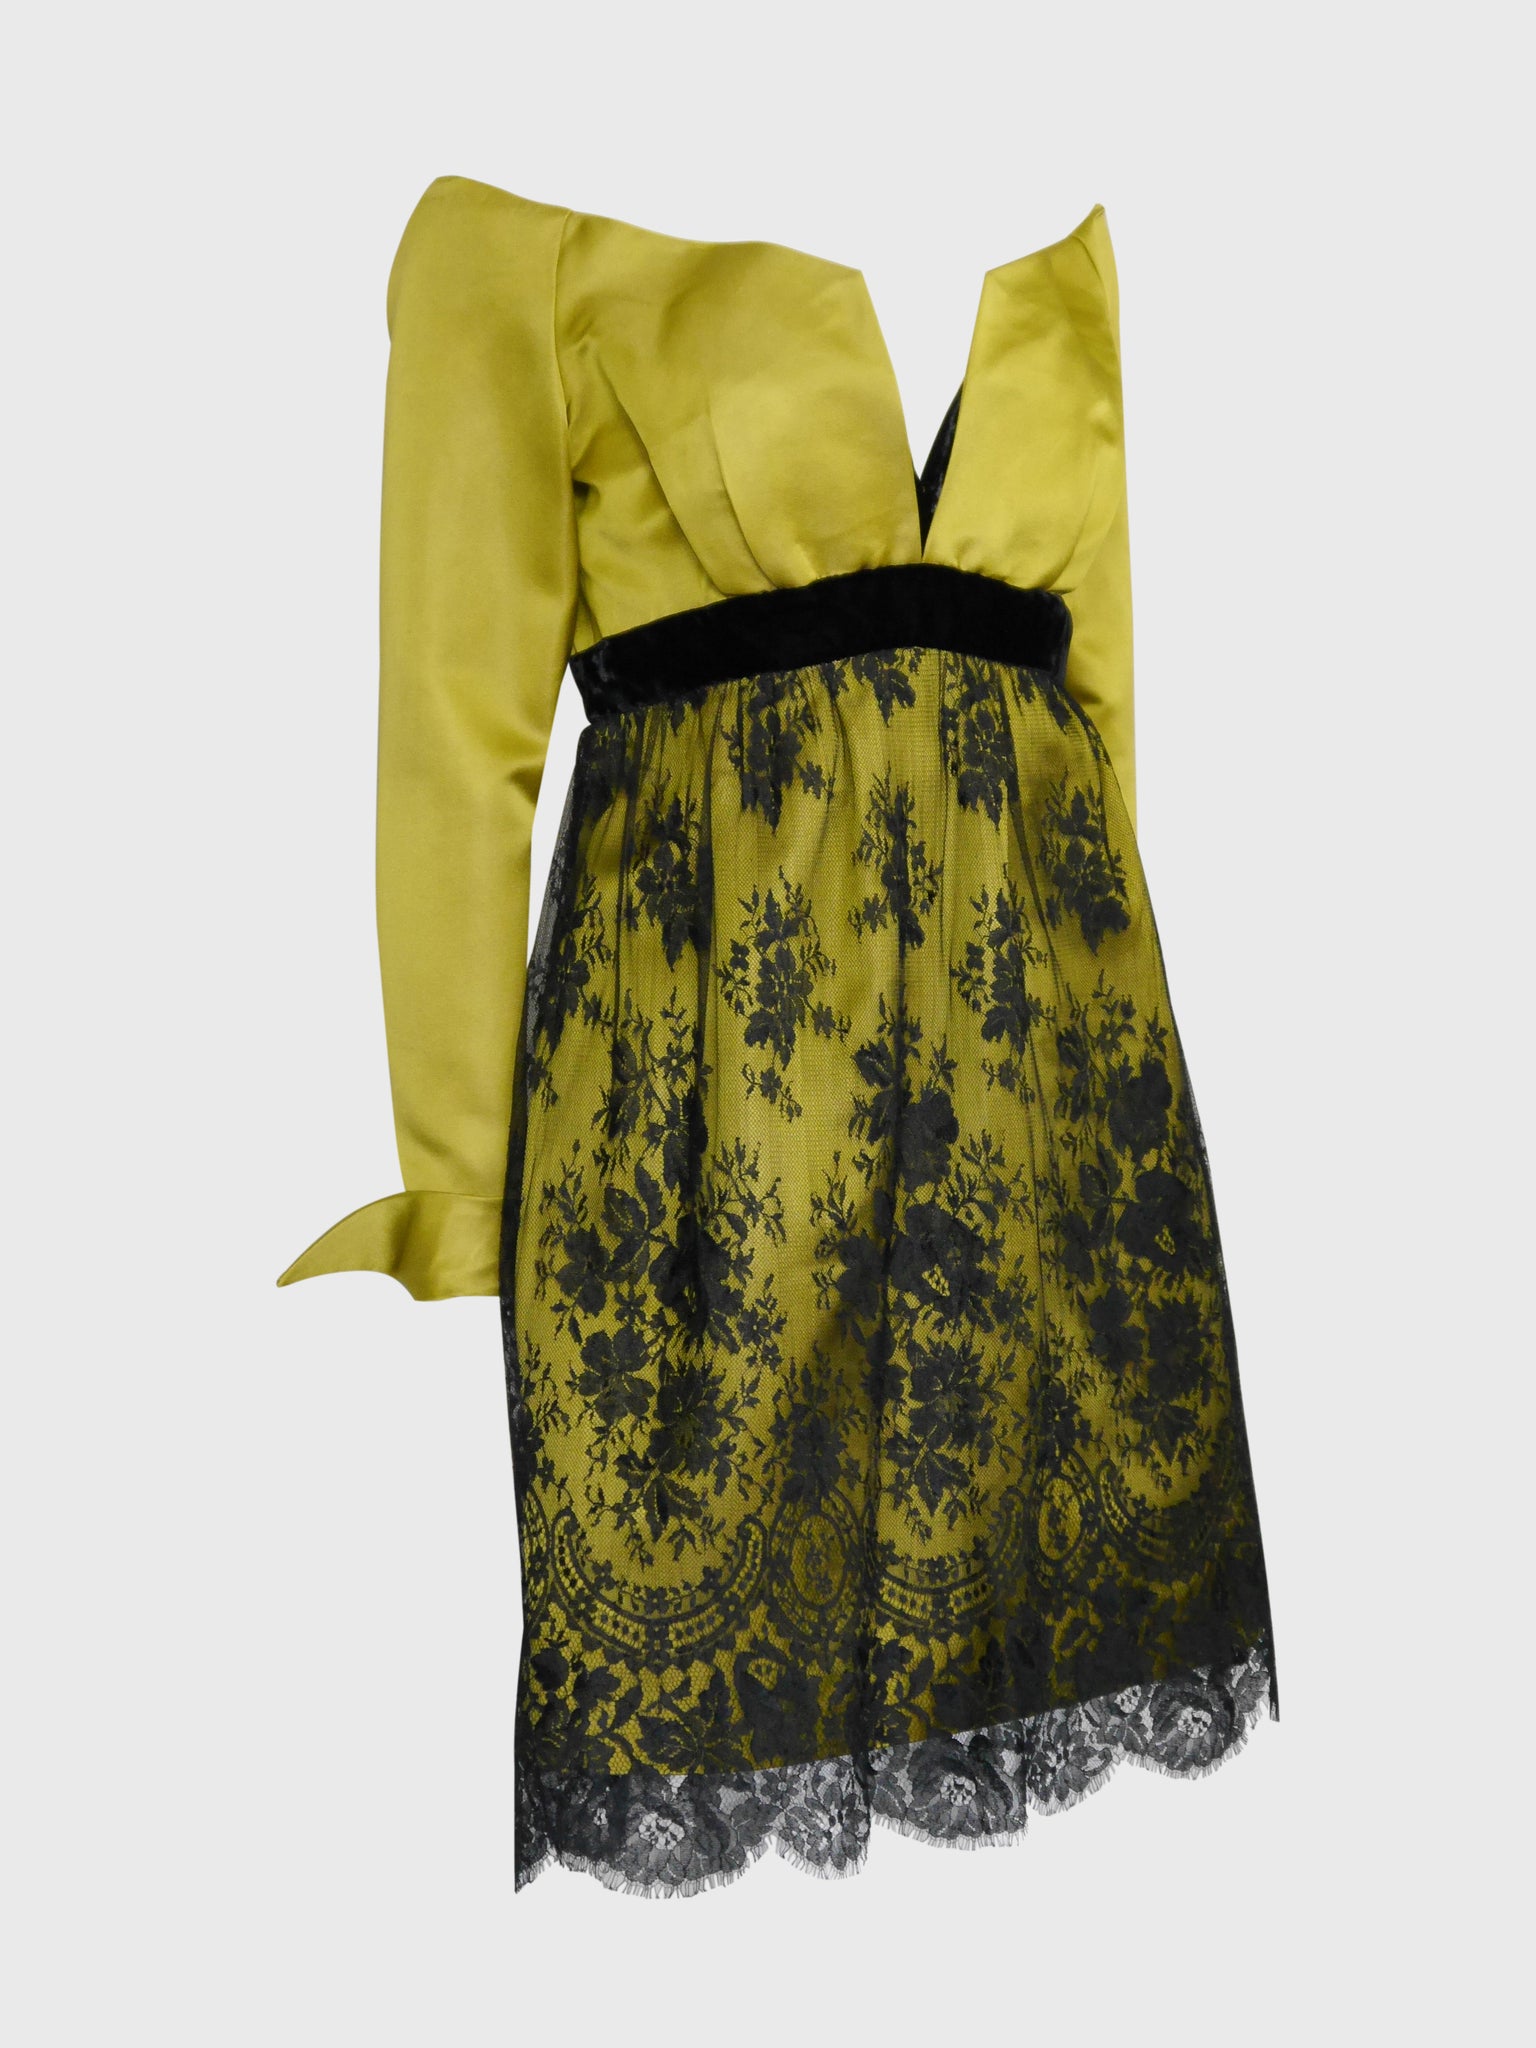 CHRISTIAN LACROIX Fall 1991 Vintage Chartreuse Cocktail Evening Dress Size L